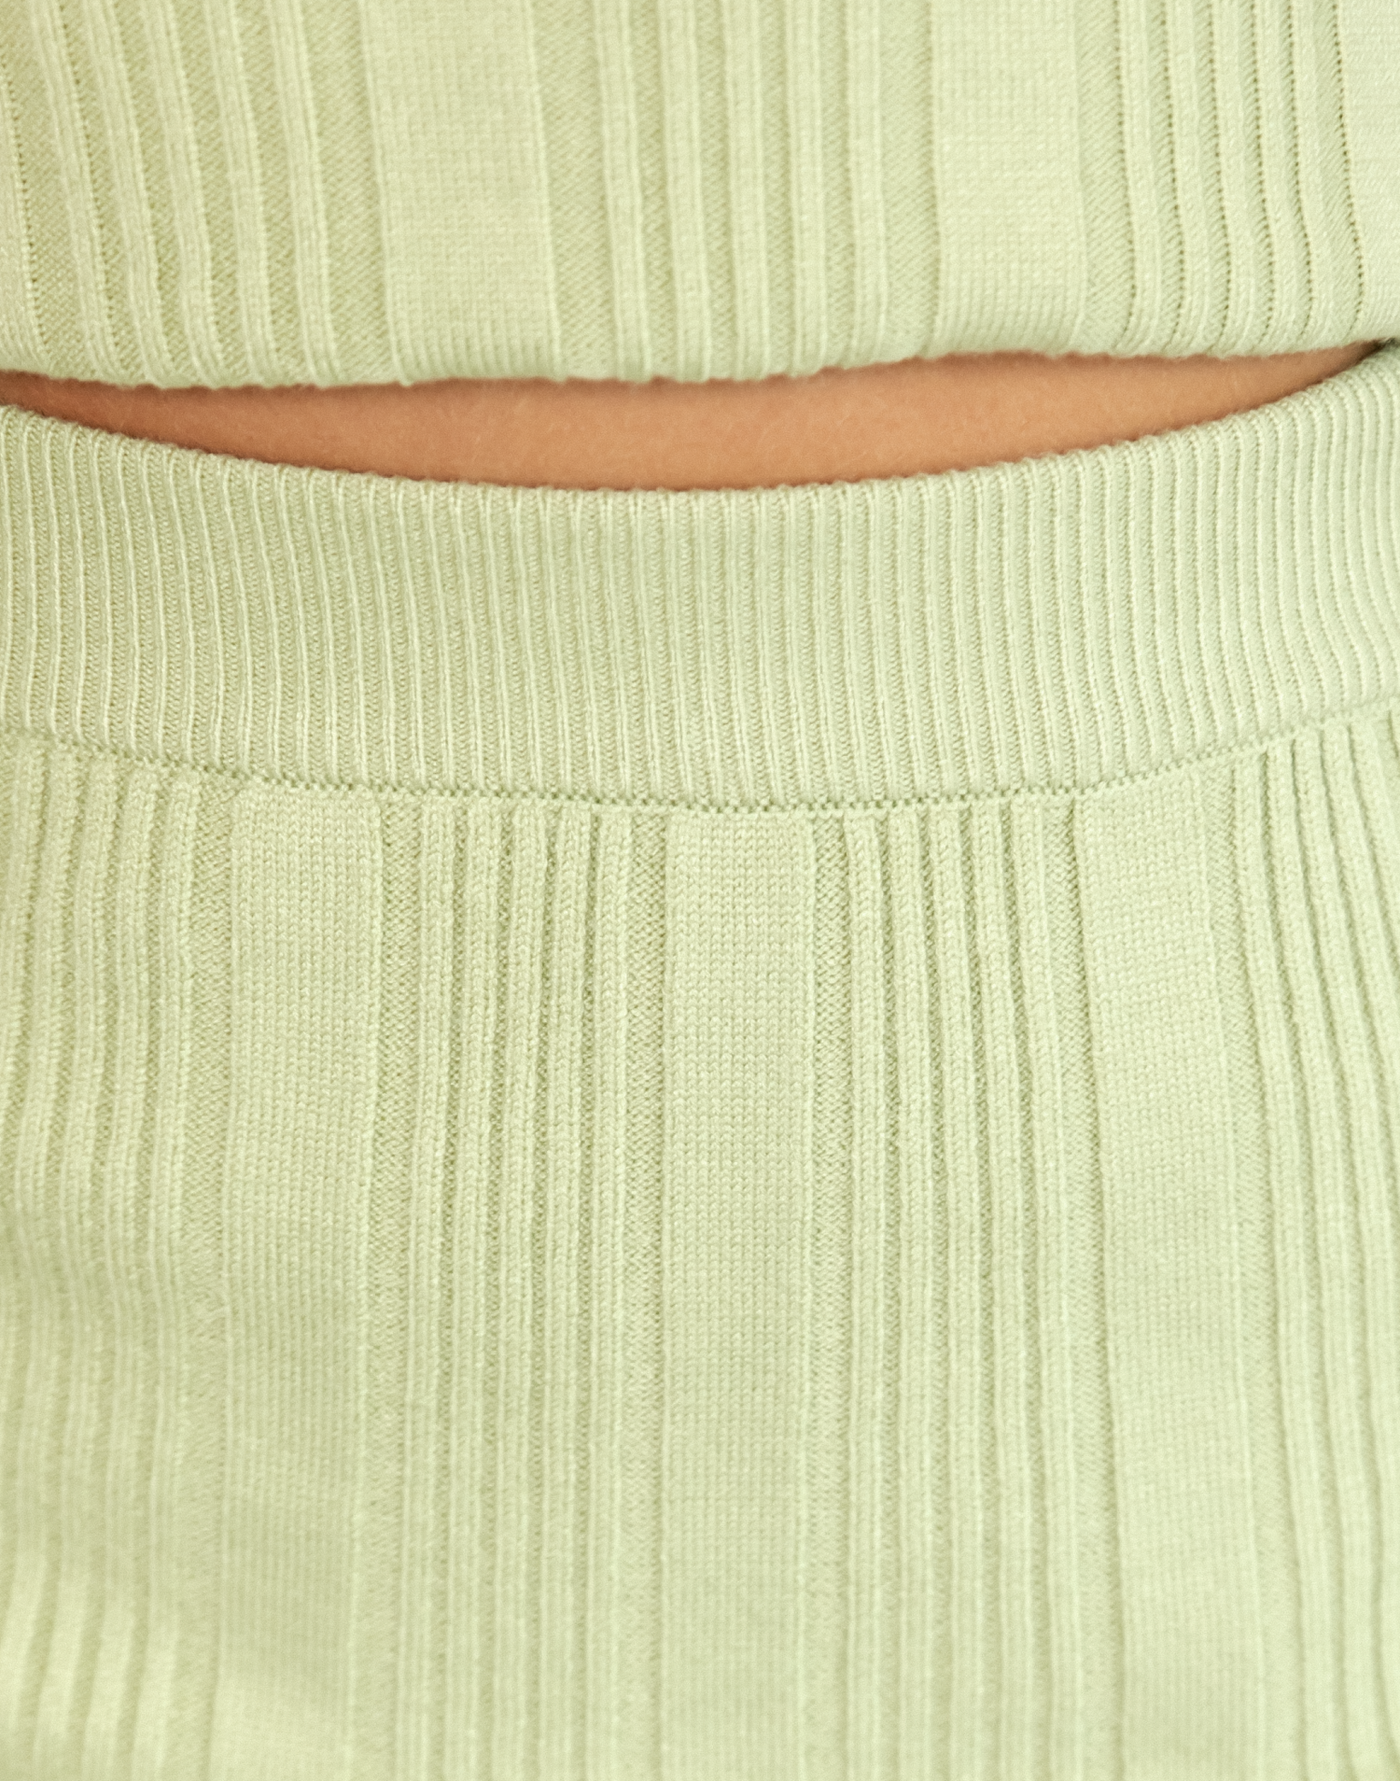 Ashley Knit Mini Skirt (Sage) - Knitted Mini Skirt - Women's Skirt - Charcoal Clothing